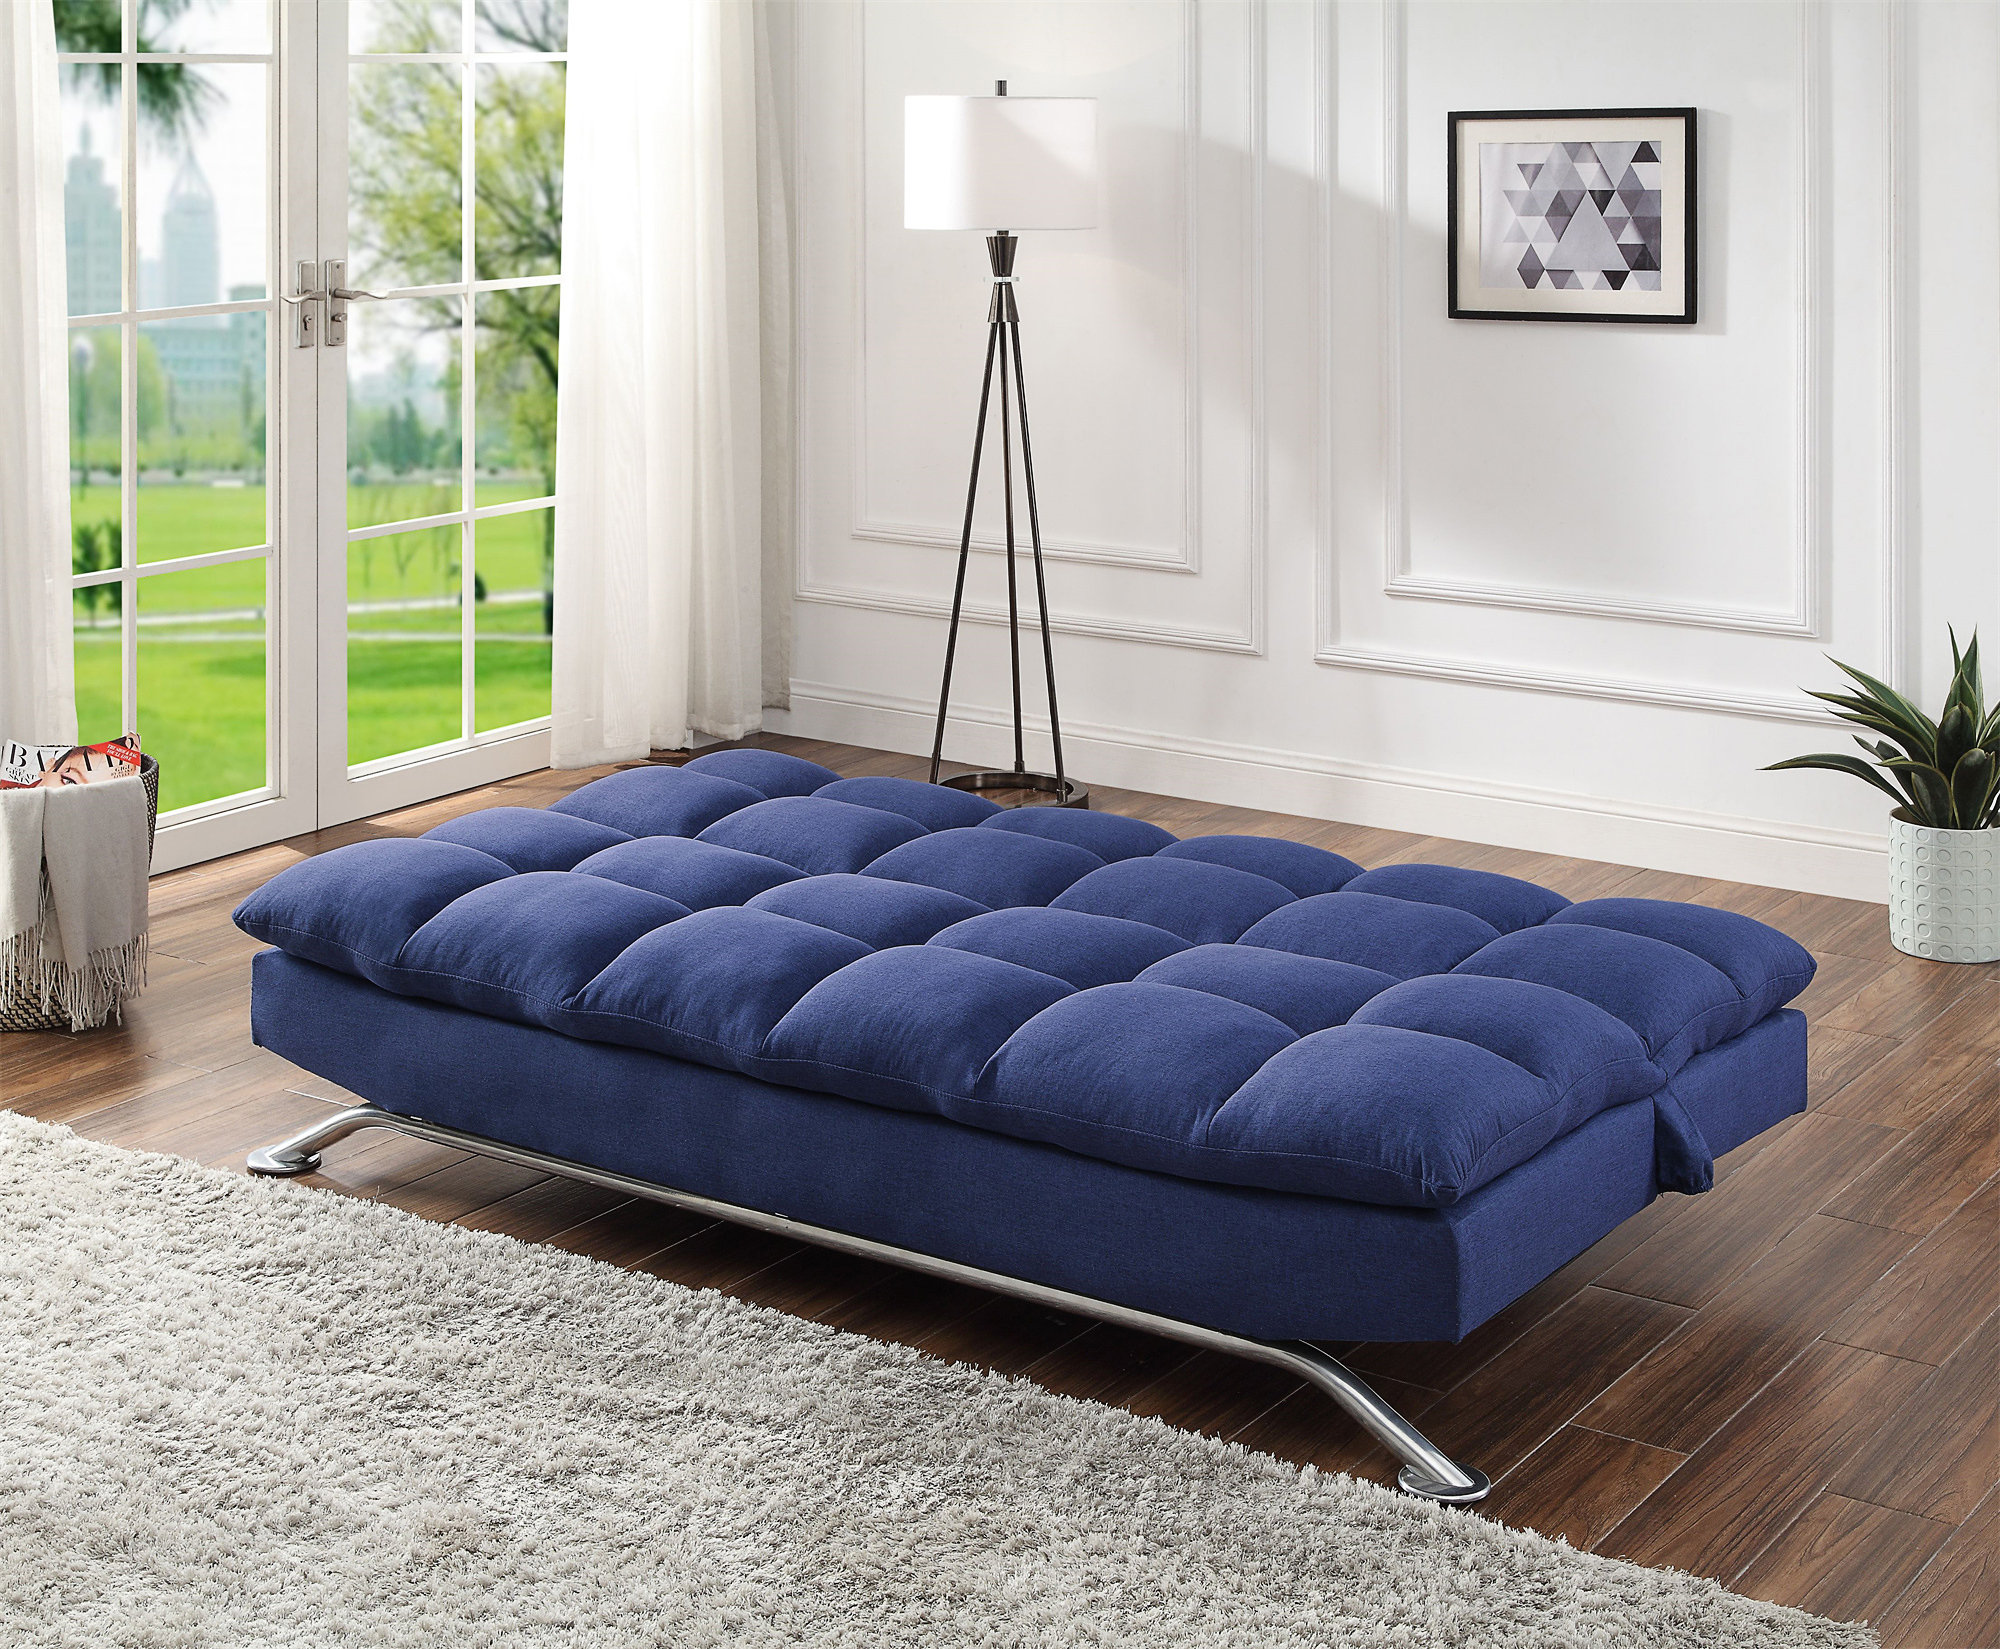 Mastery Spektakulær Kan beregnes Latitude Run® Dominisha 76'' Upholstered Sleeper Sofa,loveseat,tufted sofa, couch with metal legs | Wayfair